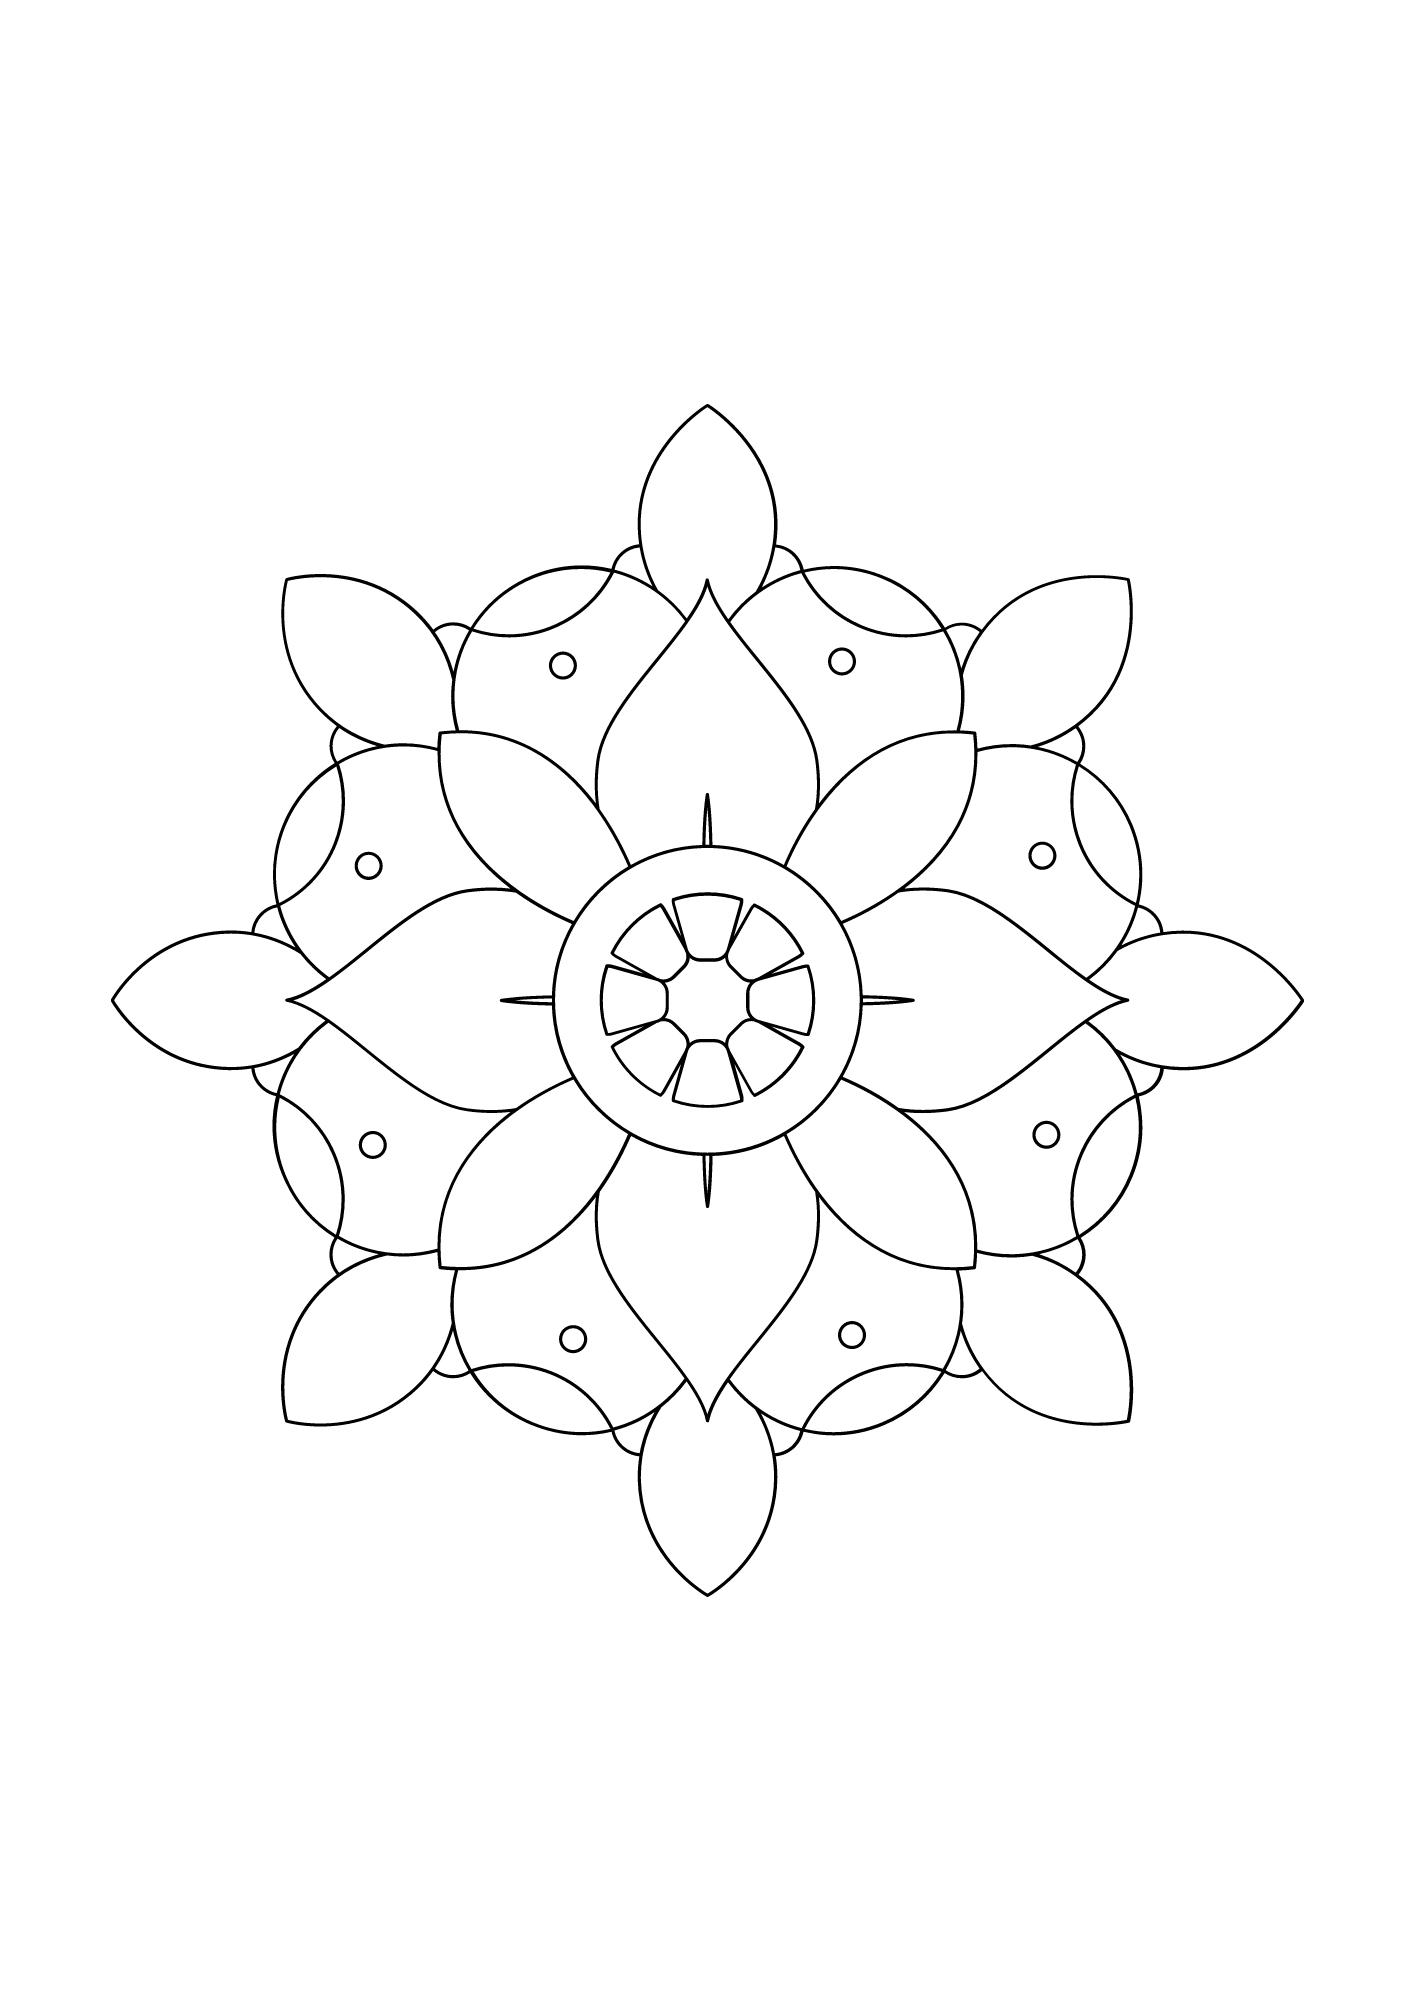 Simple Mandala Coloring Page